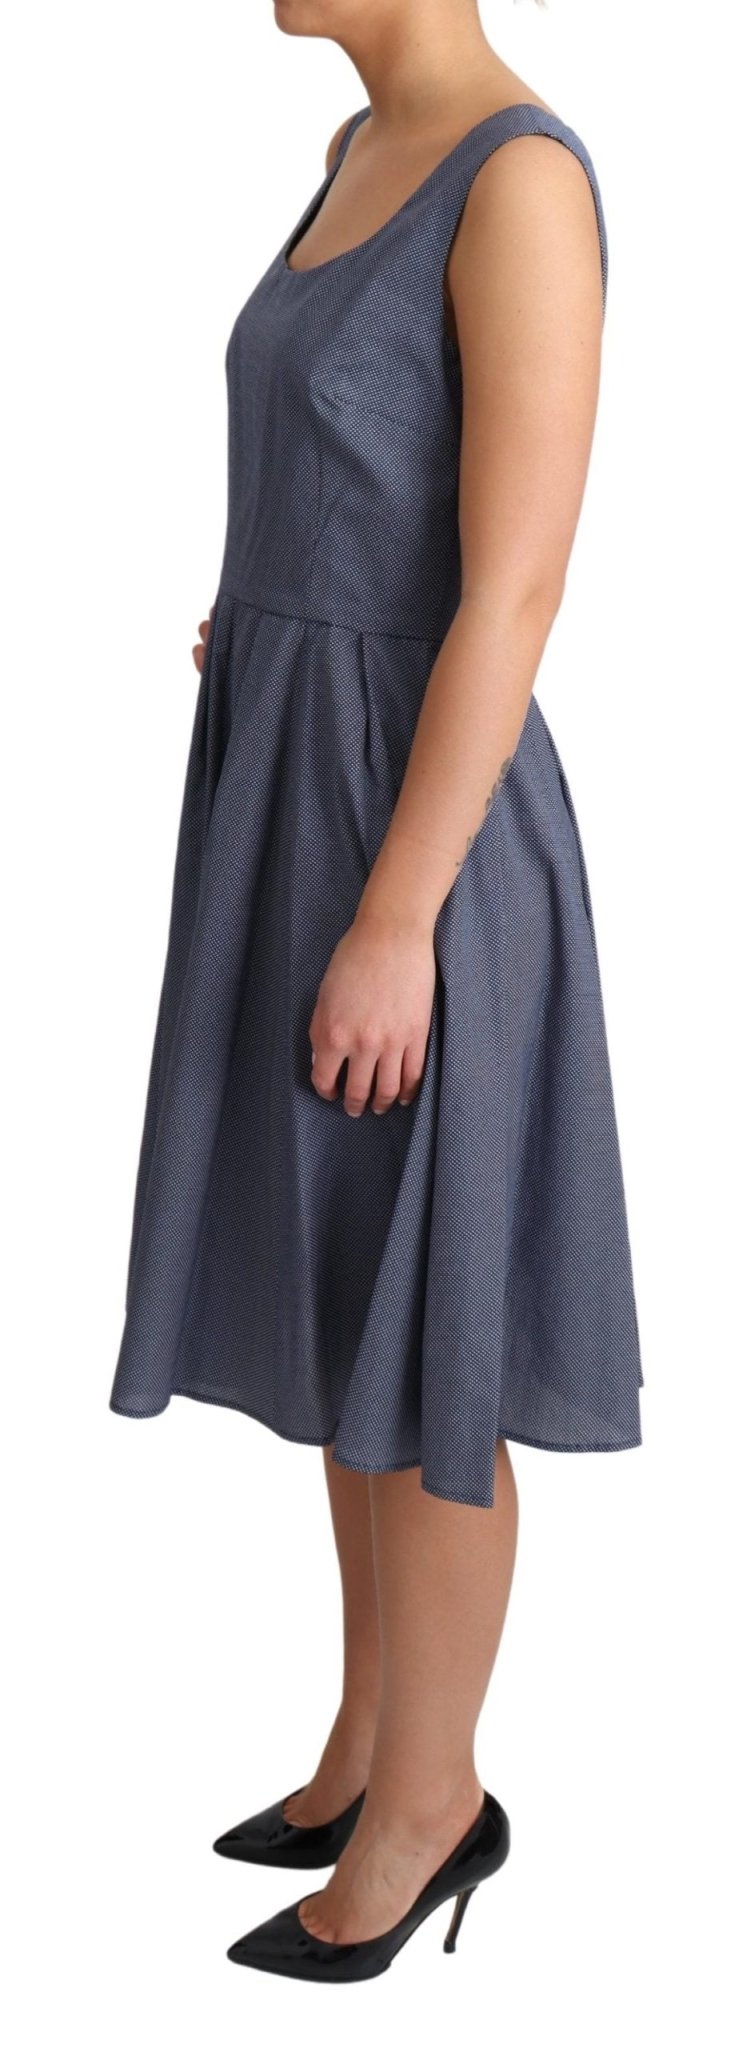 Blue Polka Cotton A-Line Stretch Dress - Avaz Shop